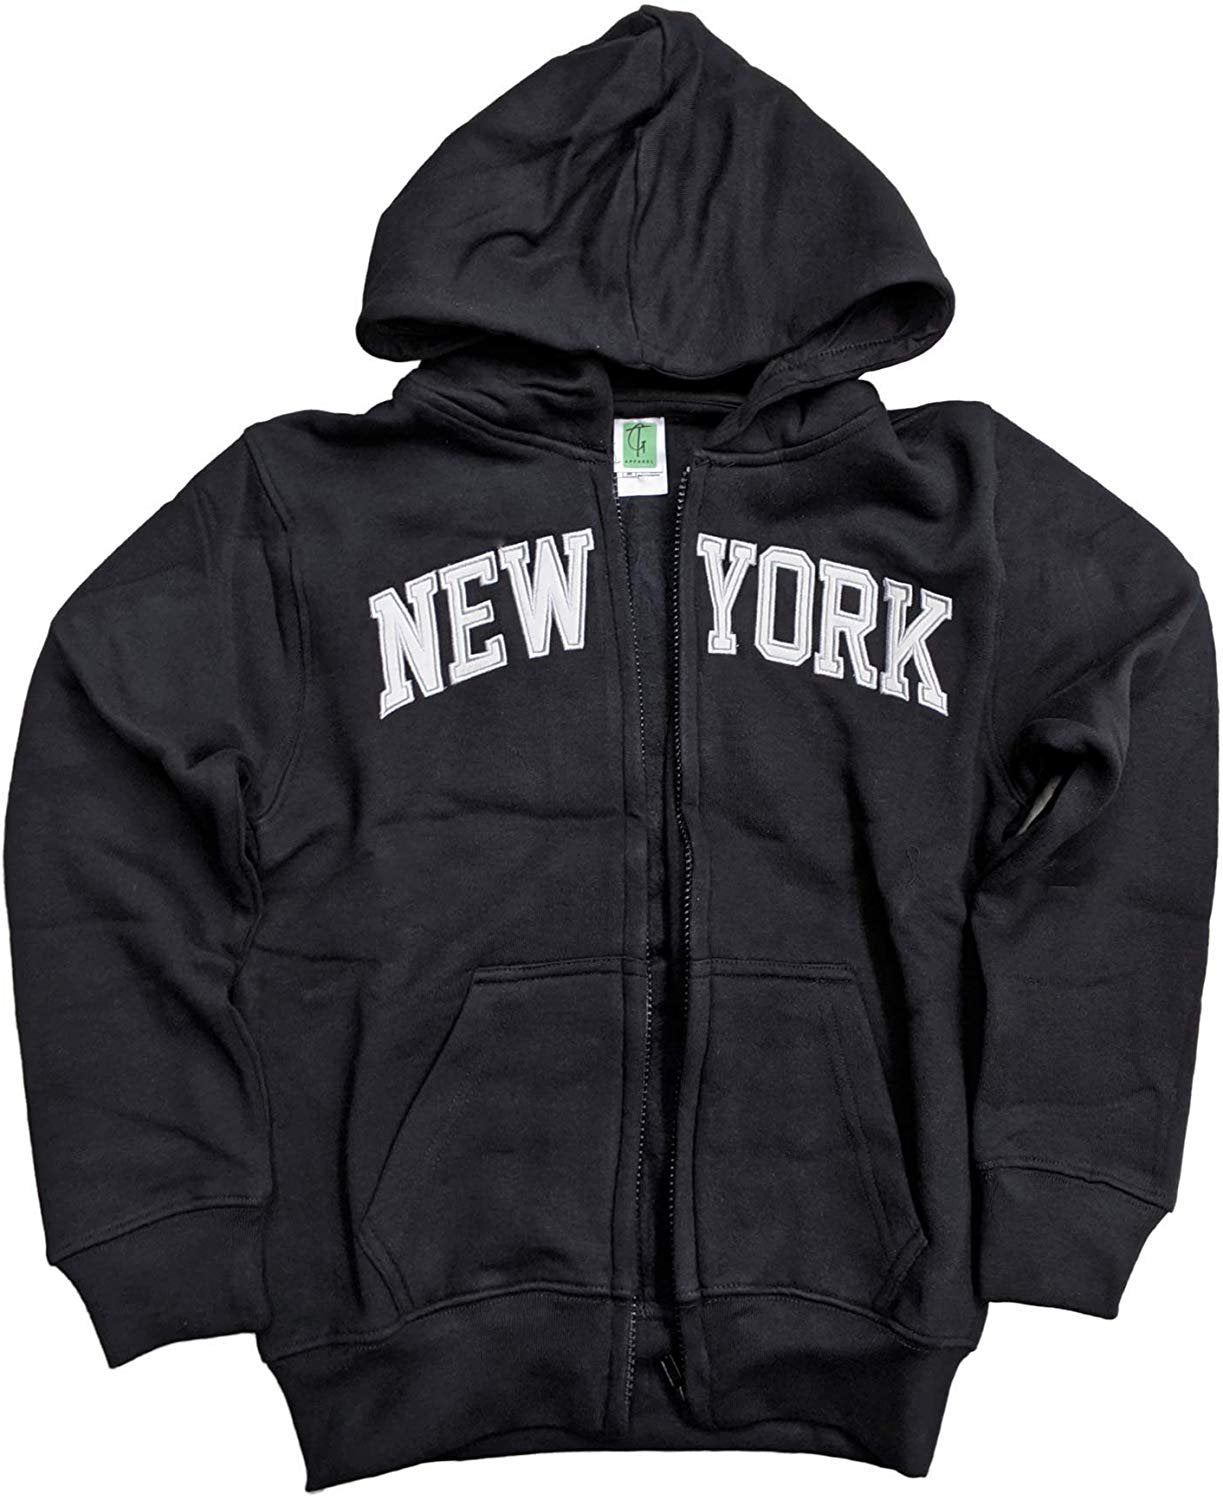 Kid's New York City Zippered Hoodie Sweatshirt Black